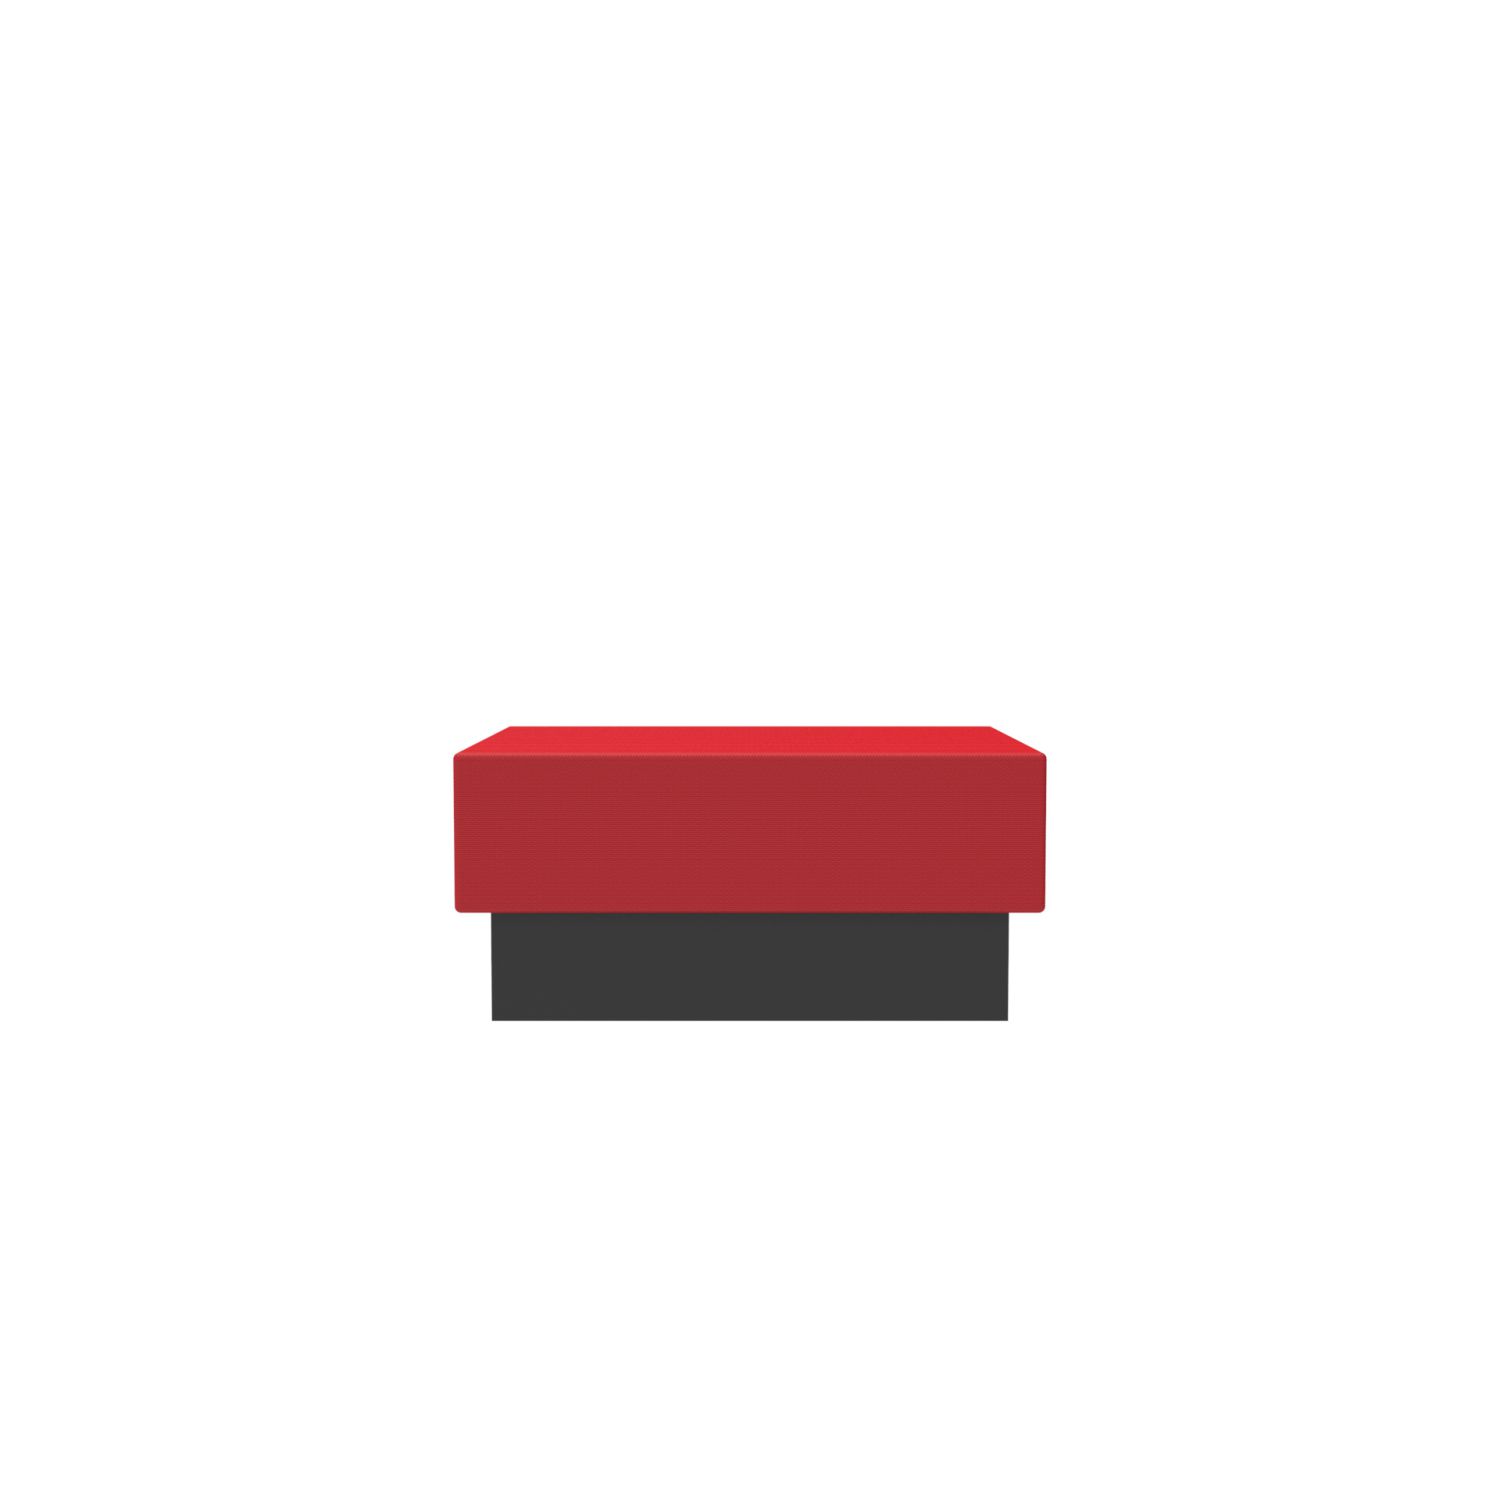 lensvelt oma blocks relaxing edition closed base without backrest 90 cm width grenada red 010 black ral9005 hard leg ends